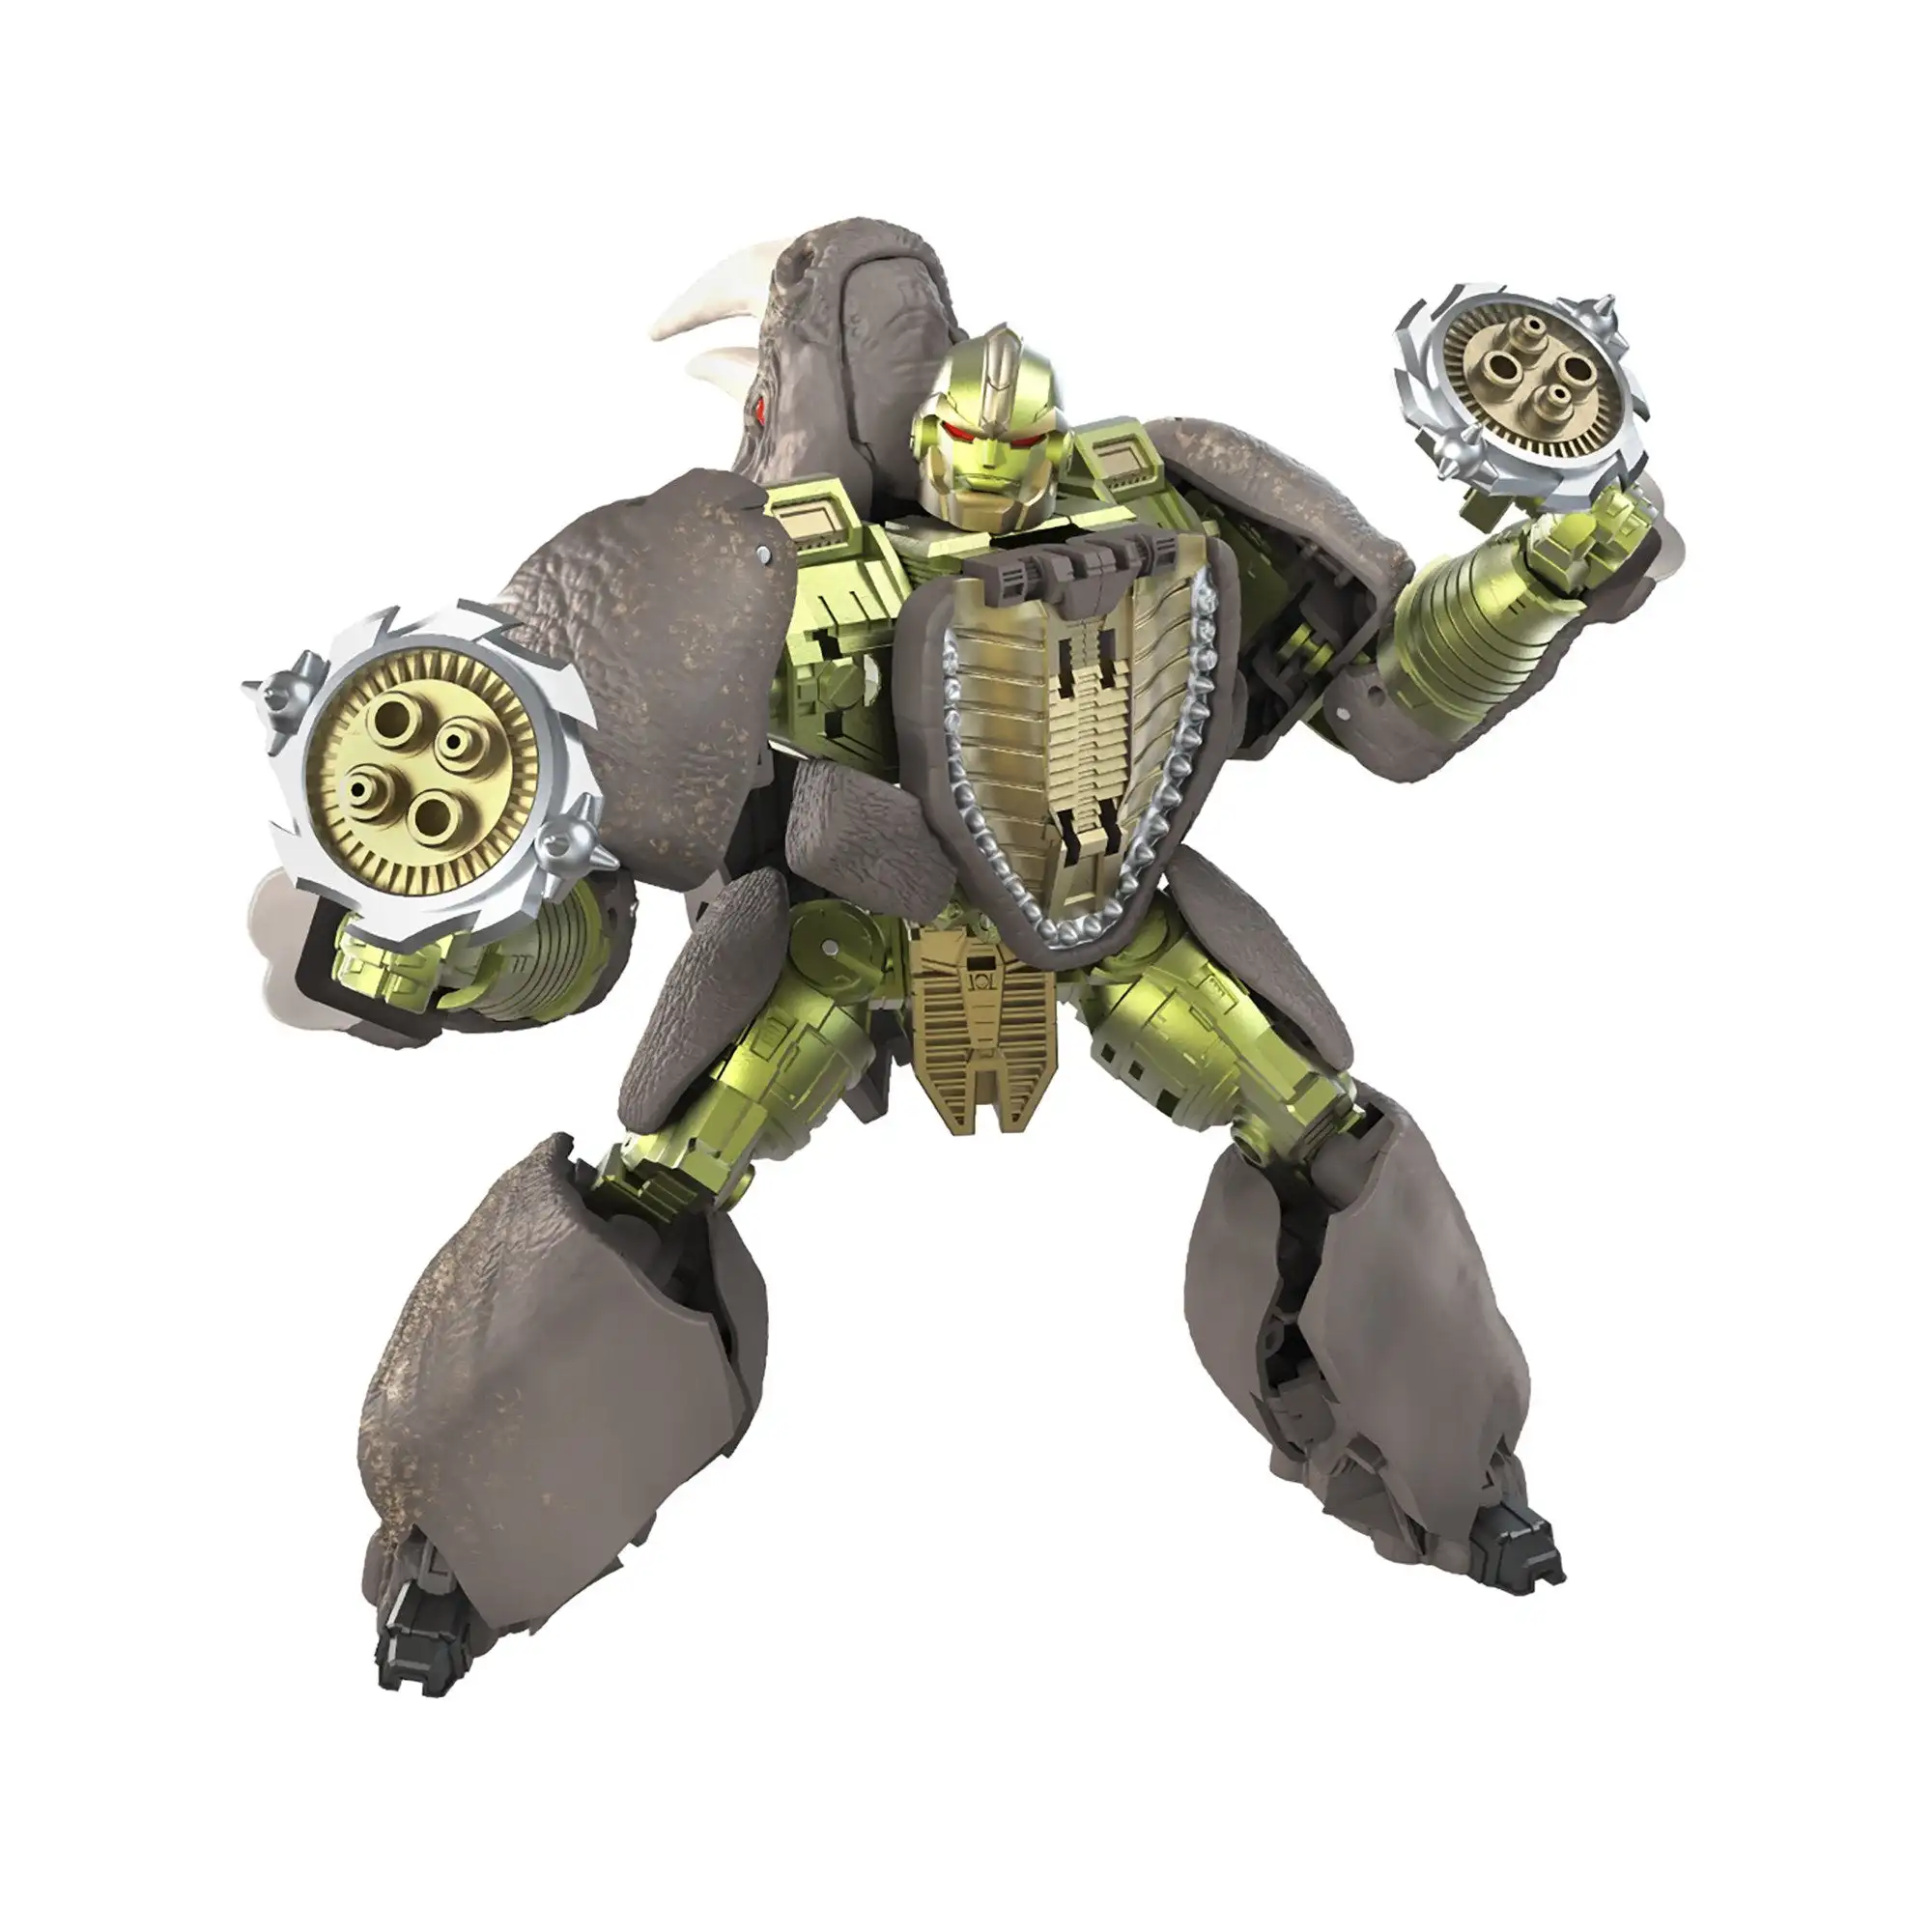 

Hasbro Transformers Generations War for Cybertron Kingdom Voyager WFC-K27 Rhinox Toys ‎for Kids Birthday Gift F0695